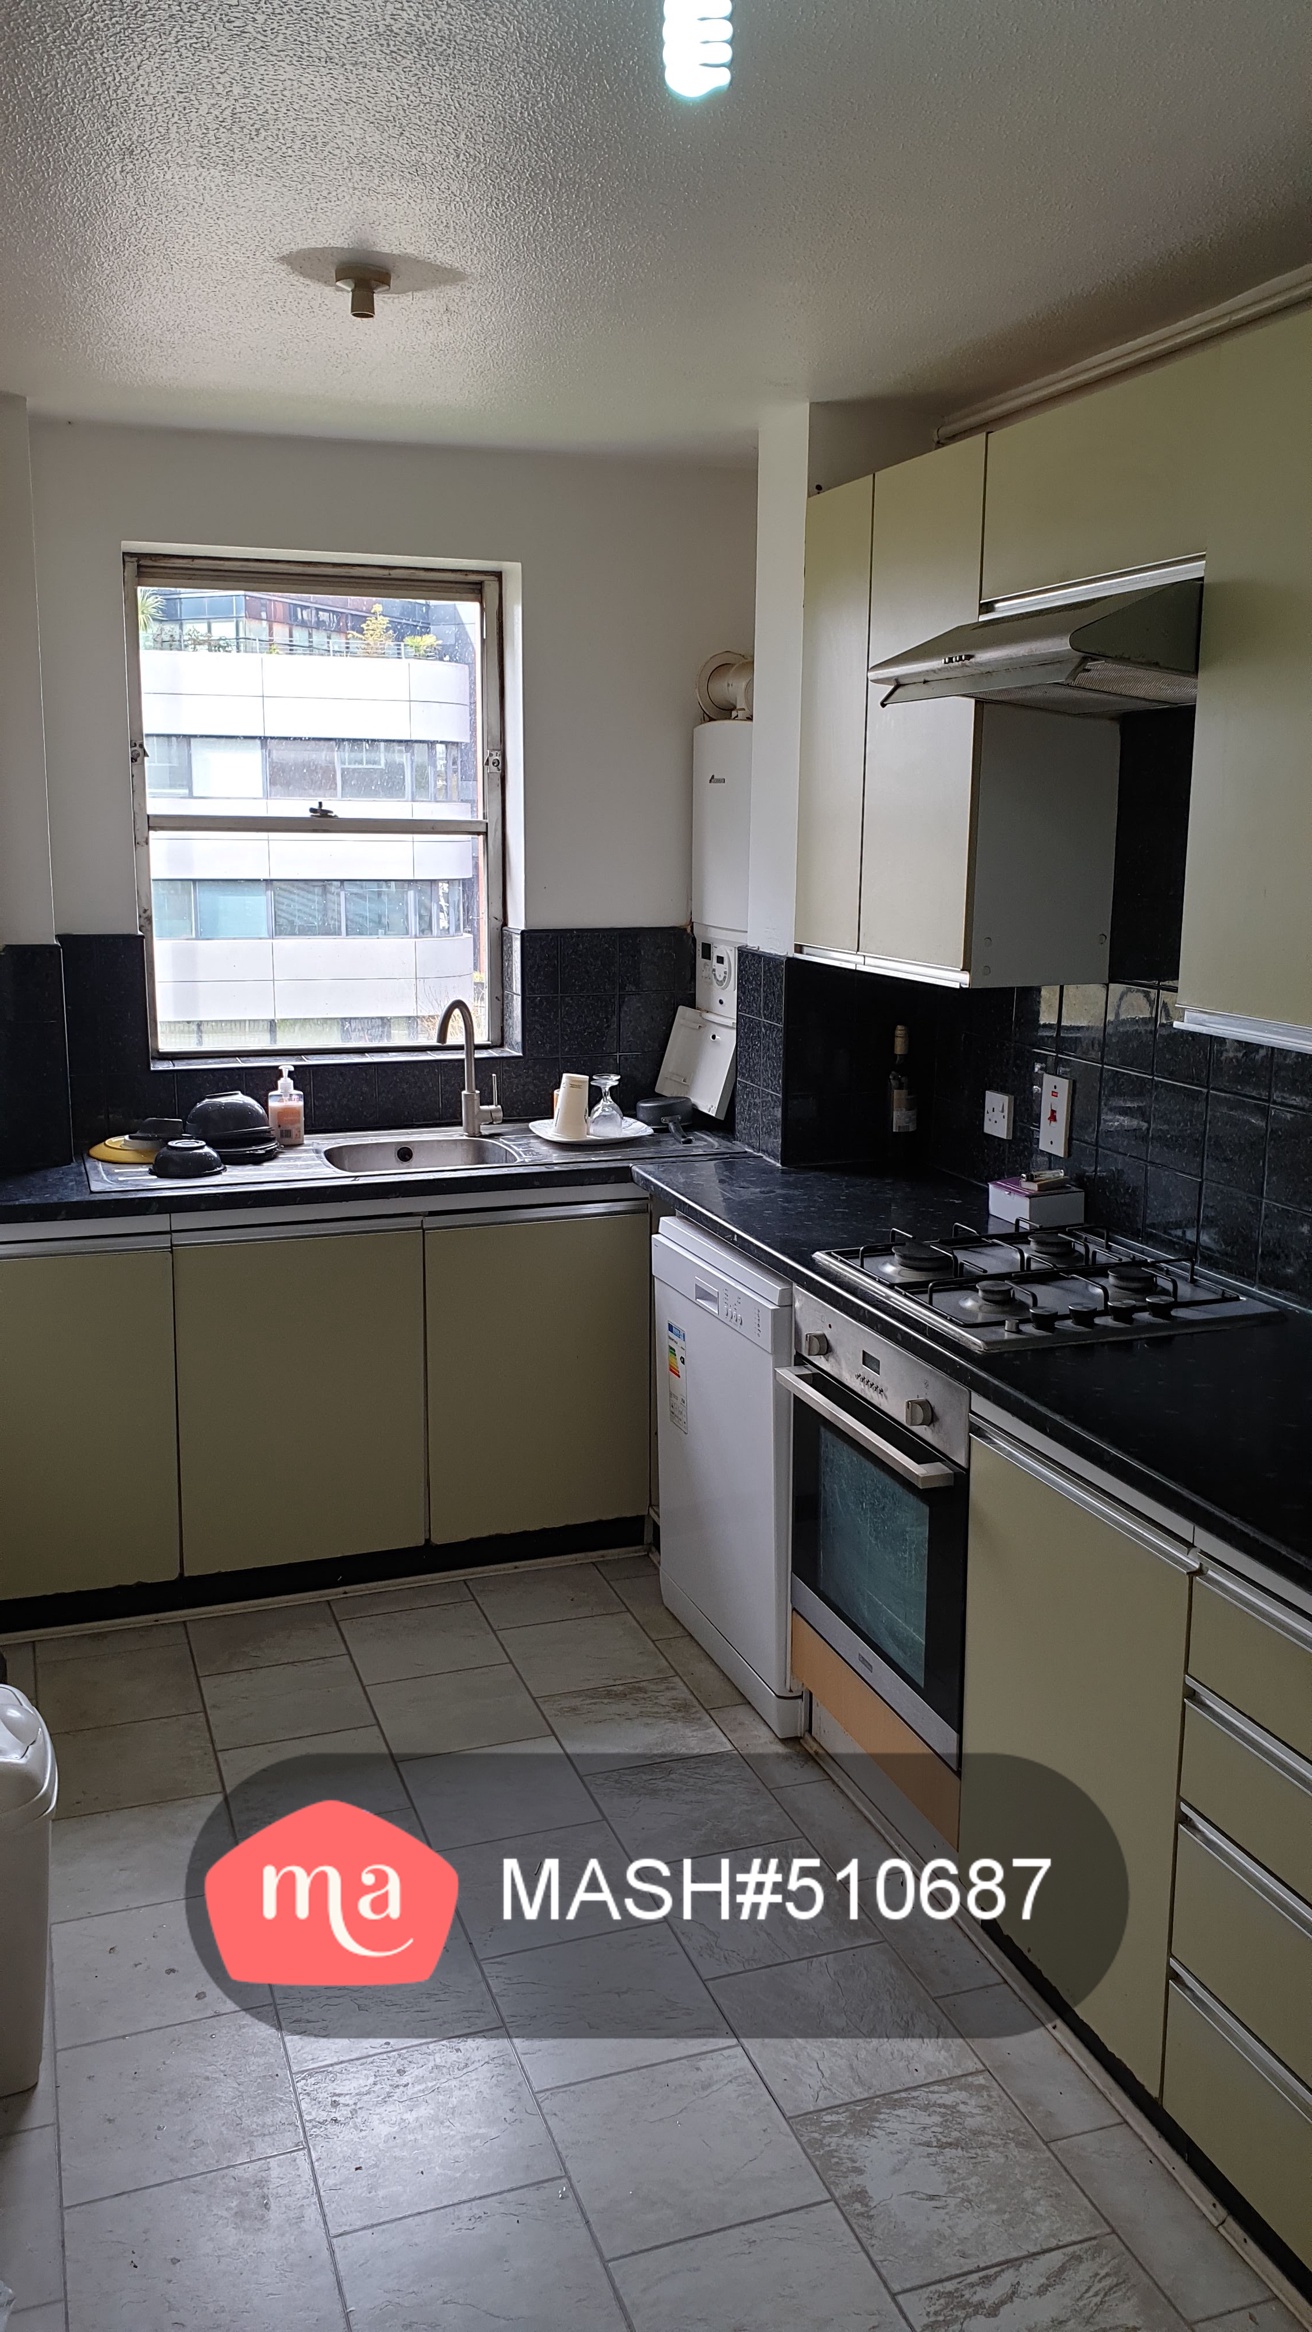 2 Bedroom Flat to rent in Croydon - Mashroom